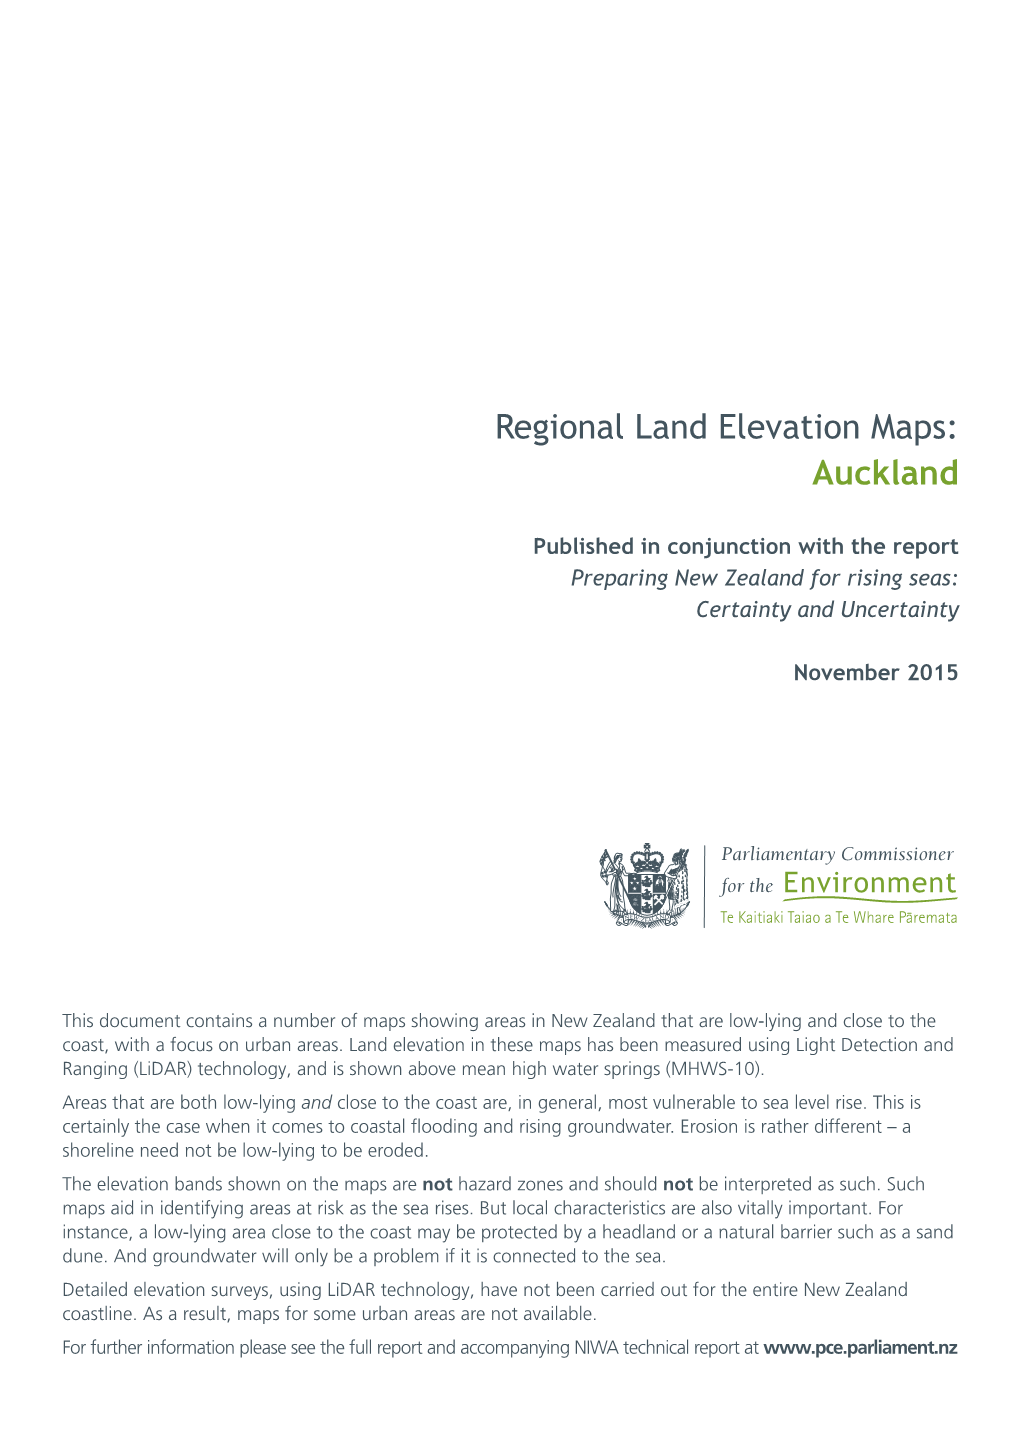 Regional Land Elevation Maps: Auckland